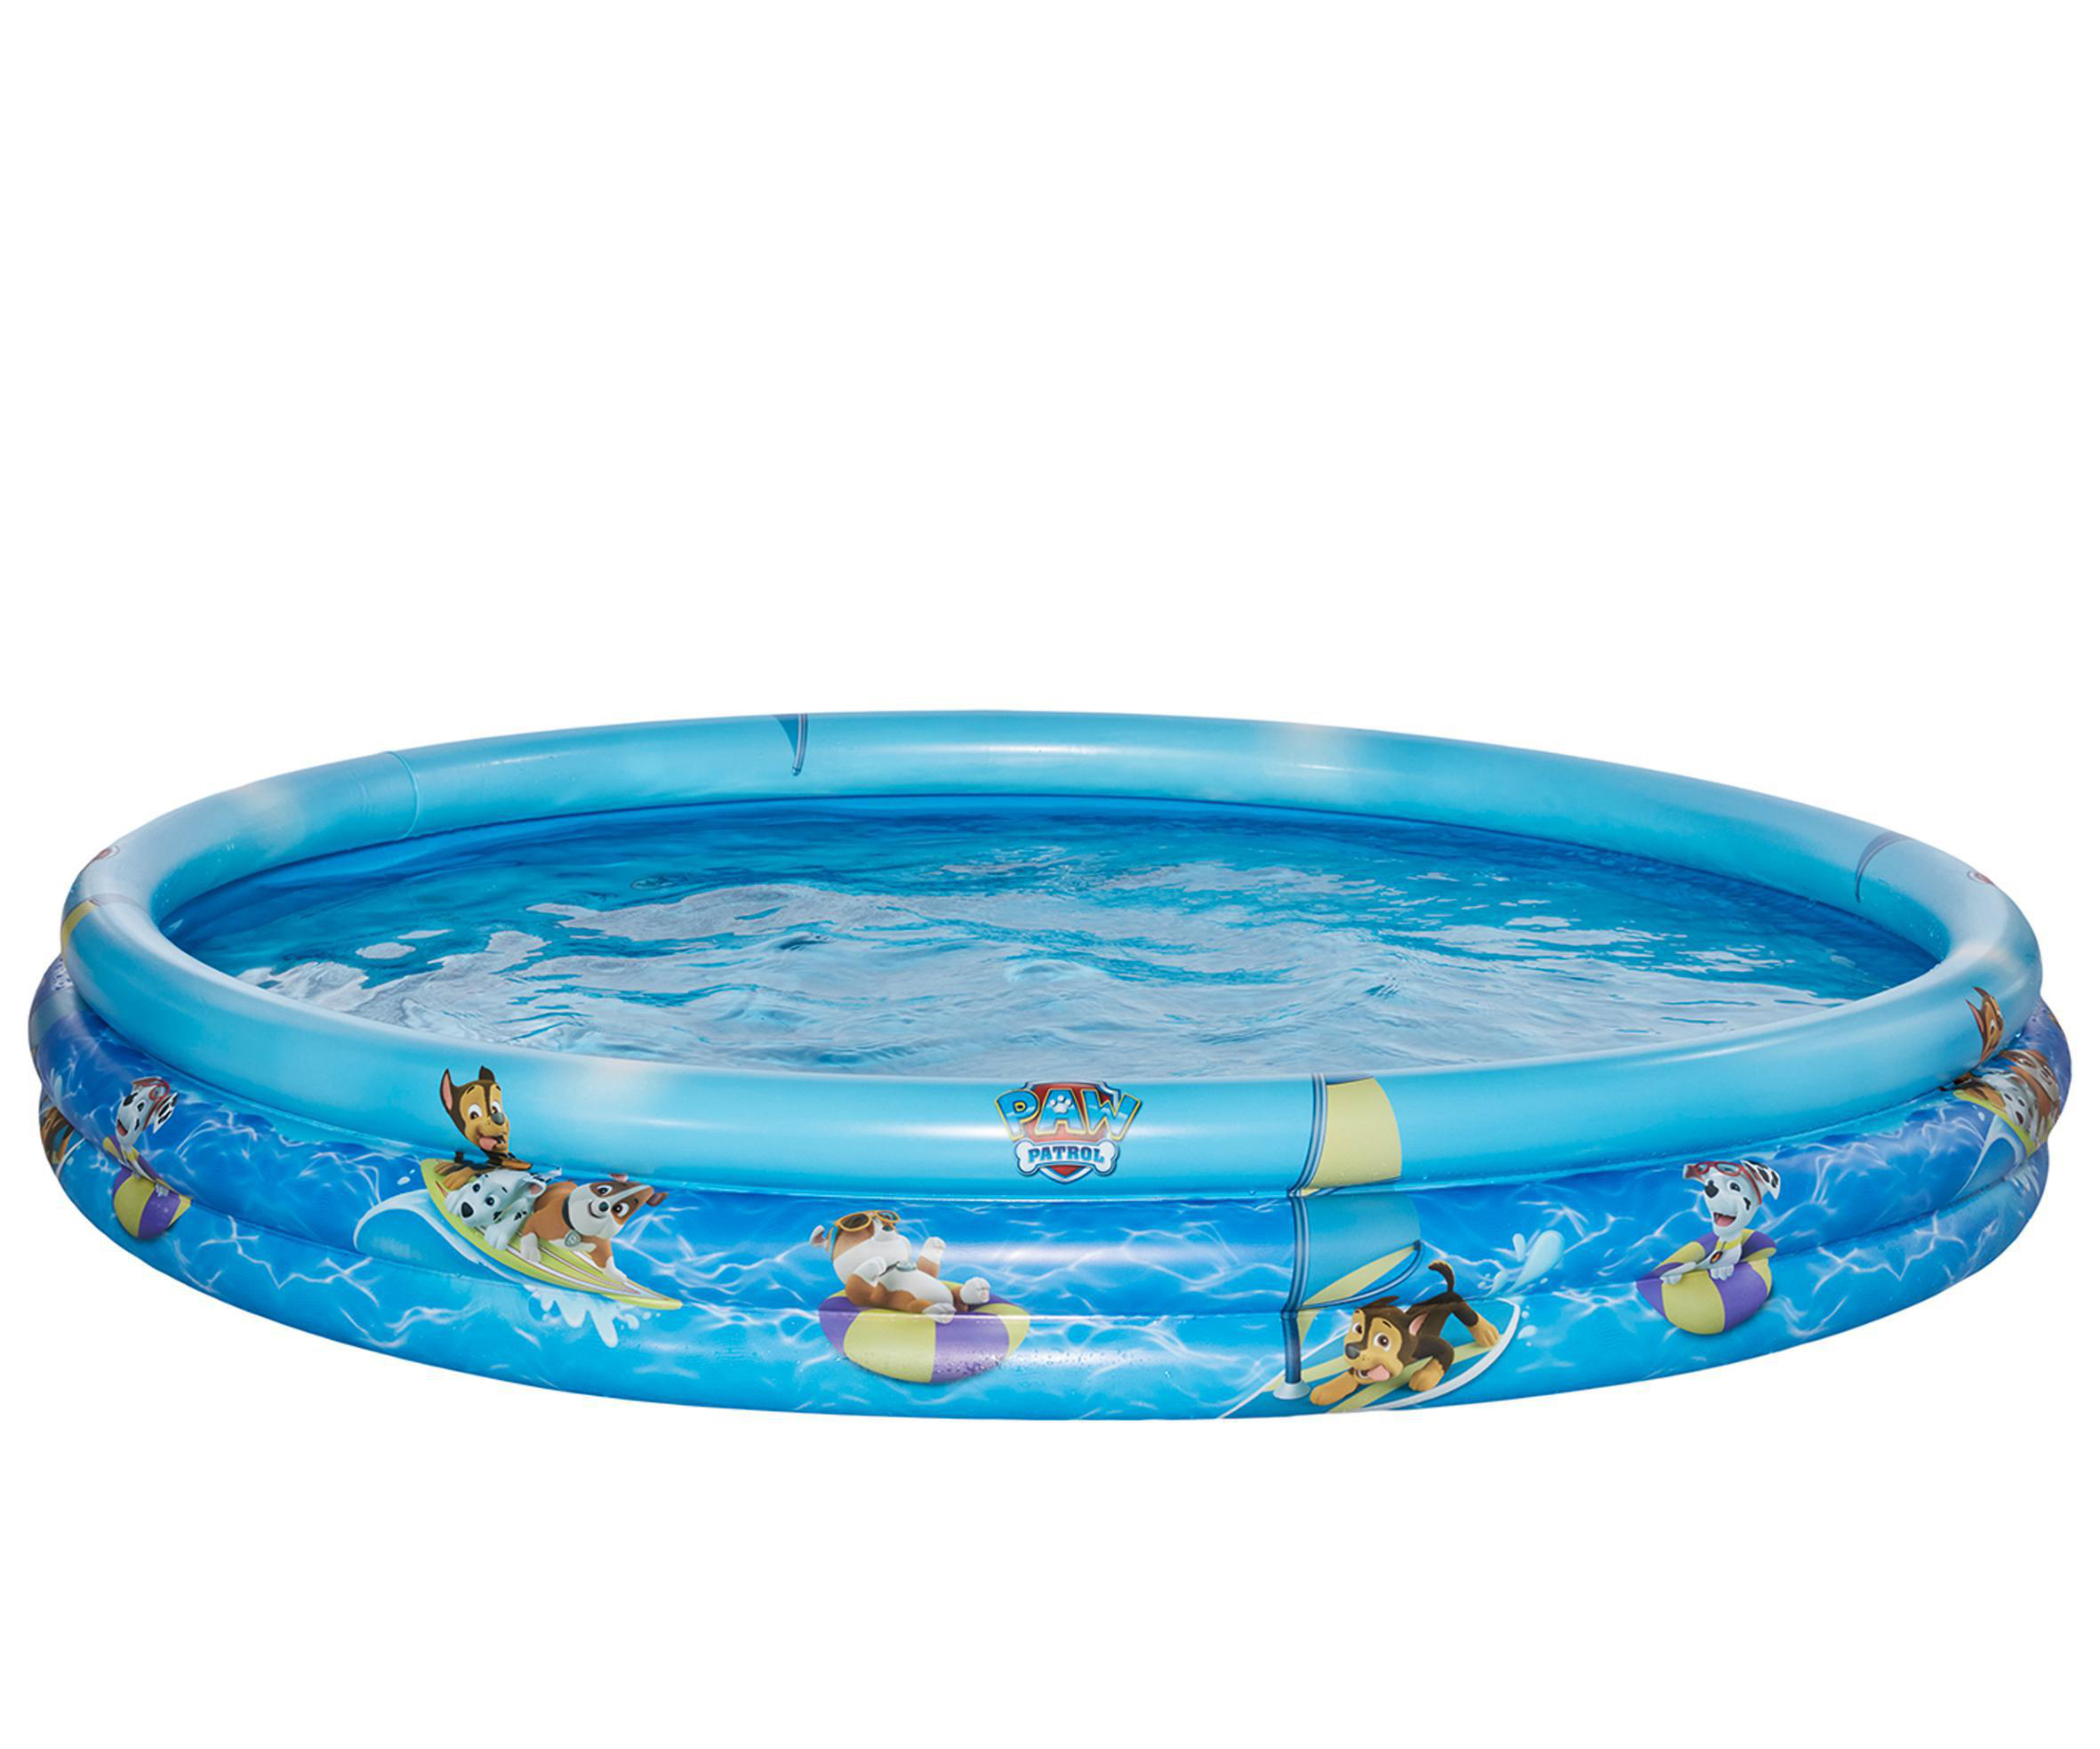 HAPPY PEOPLE x 25 PAW cm Paw 3-Ring-Pool 150 Wasserspielzeug Mehrfarbig Patrol, ca